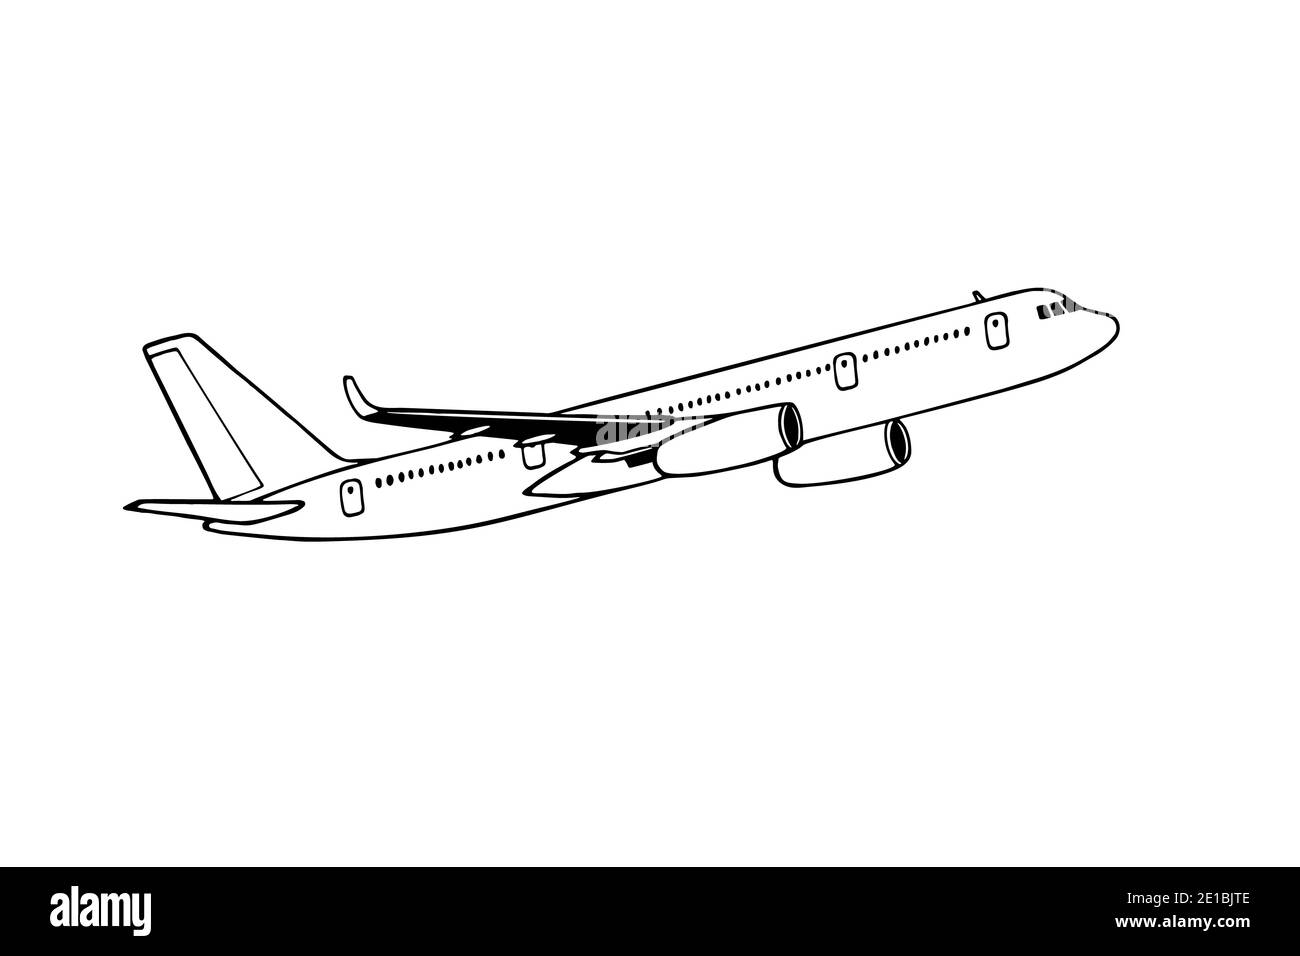 Vector Sketch Illustration Plane Stock Illustration  Download Image Now   Airplane Sketch Illustration  iStock